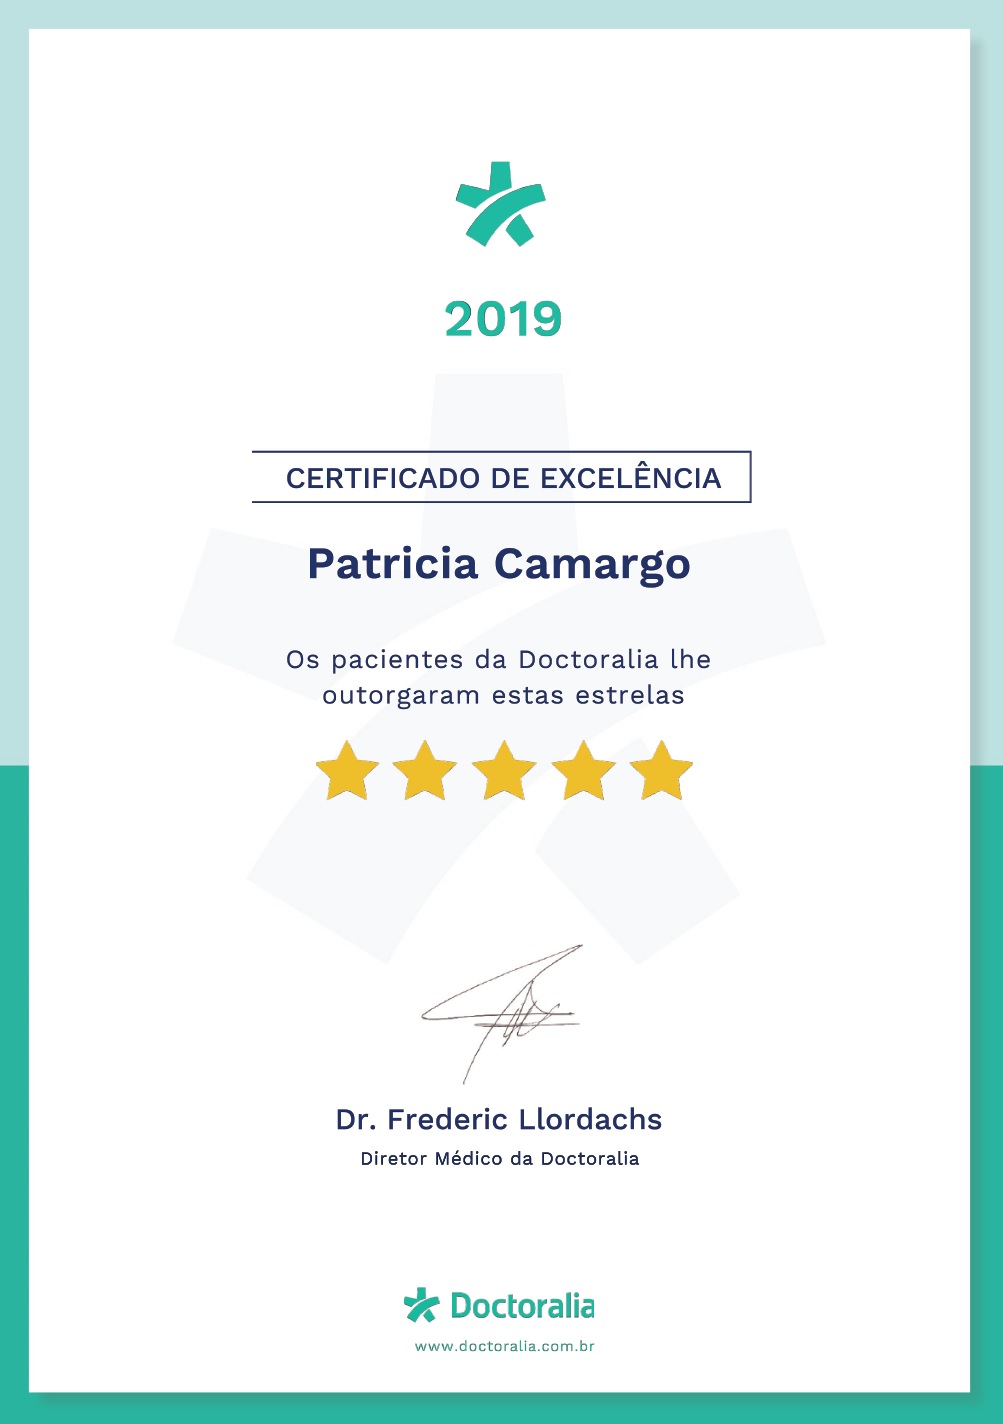 Certificado de Excelência Doctoralia 2019